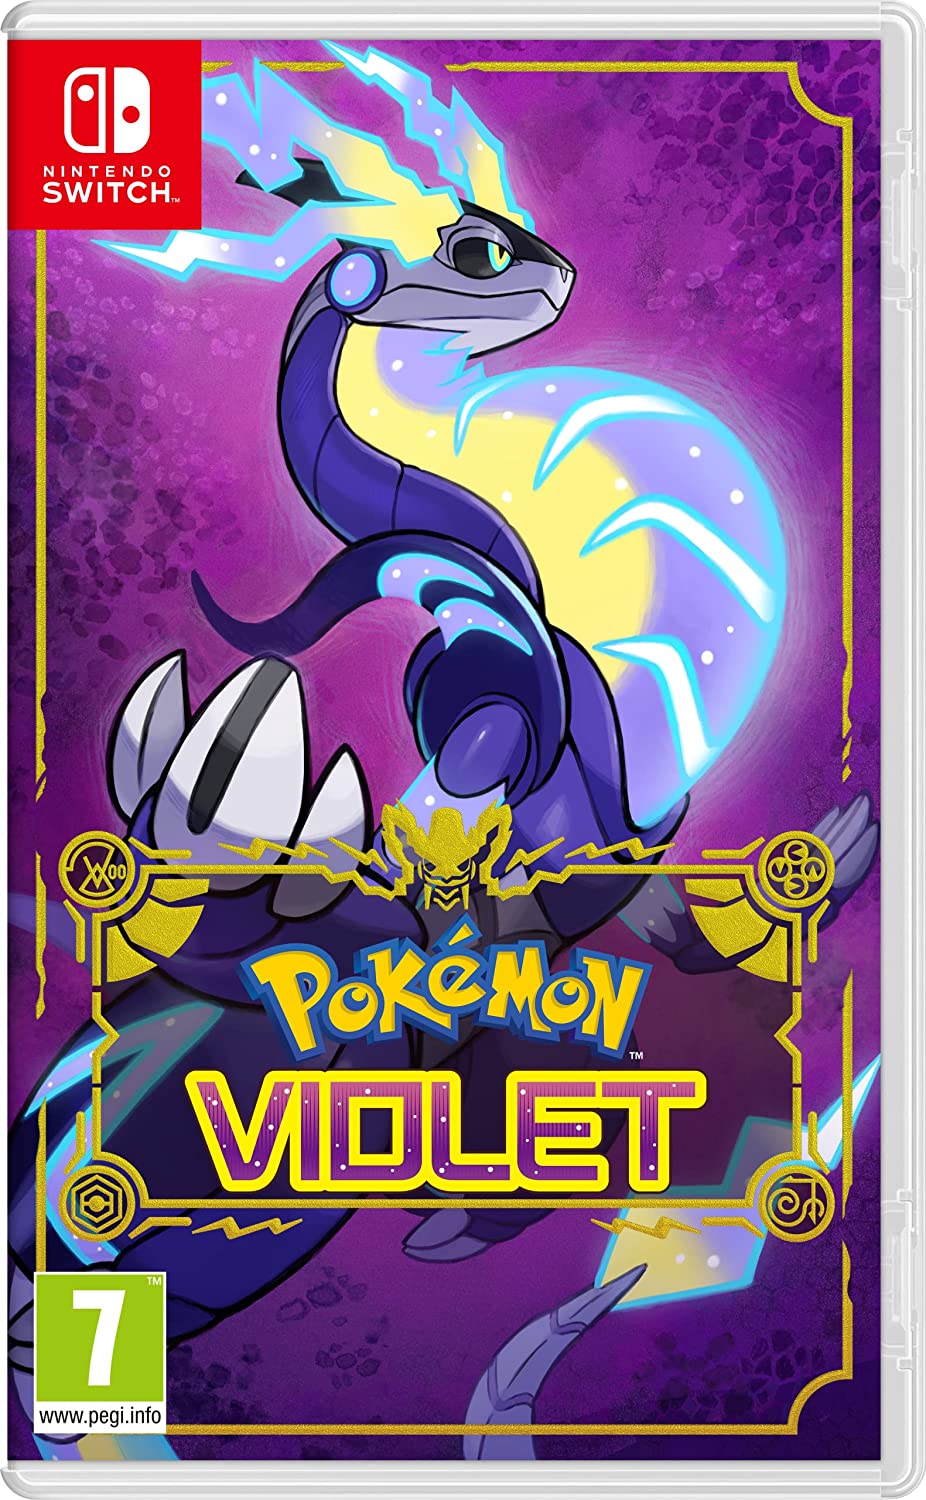 Pokémon Violet game artwork for Nintendo Switch.